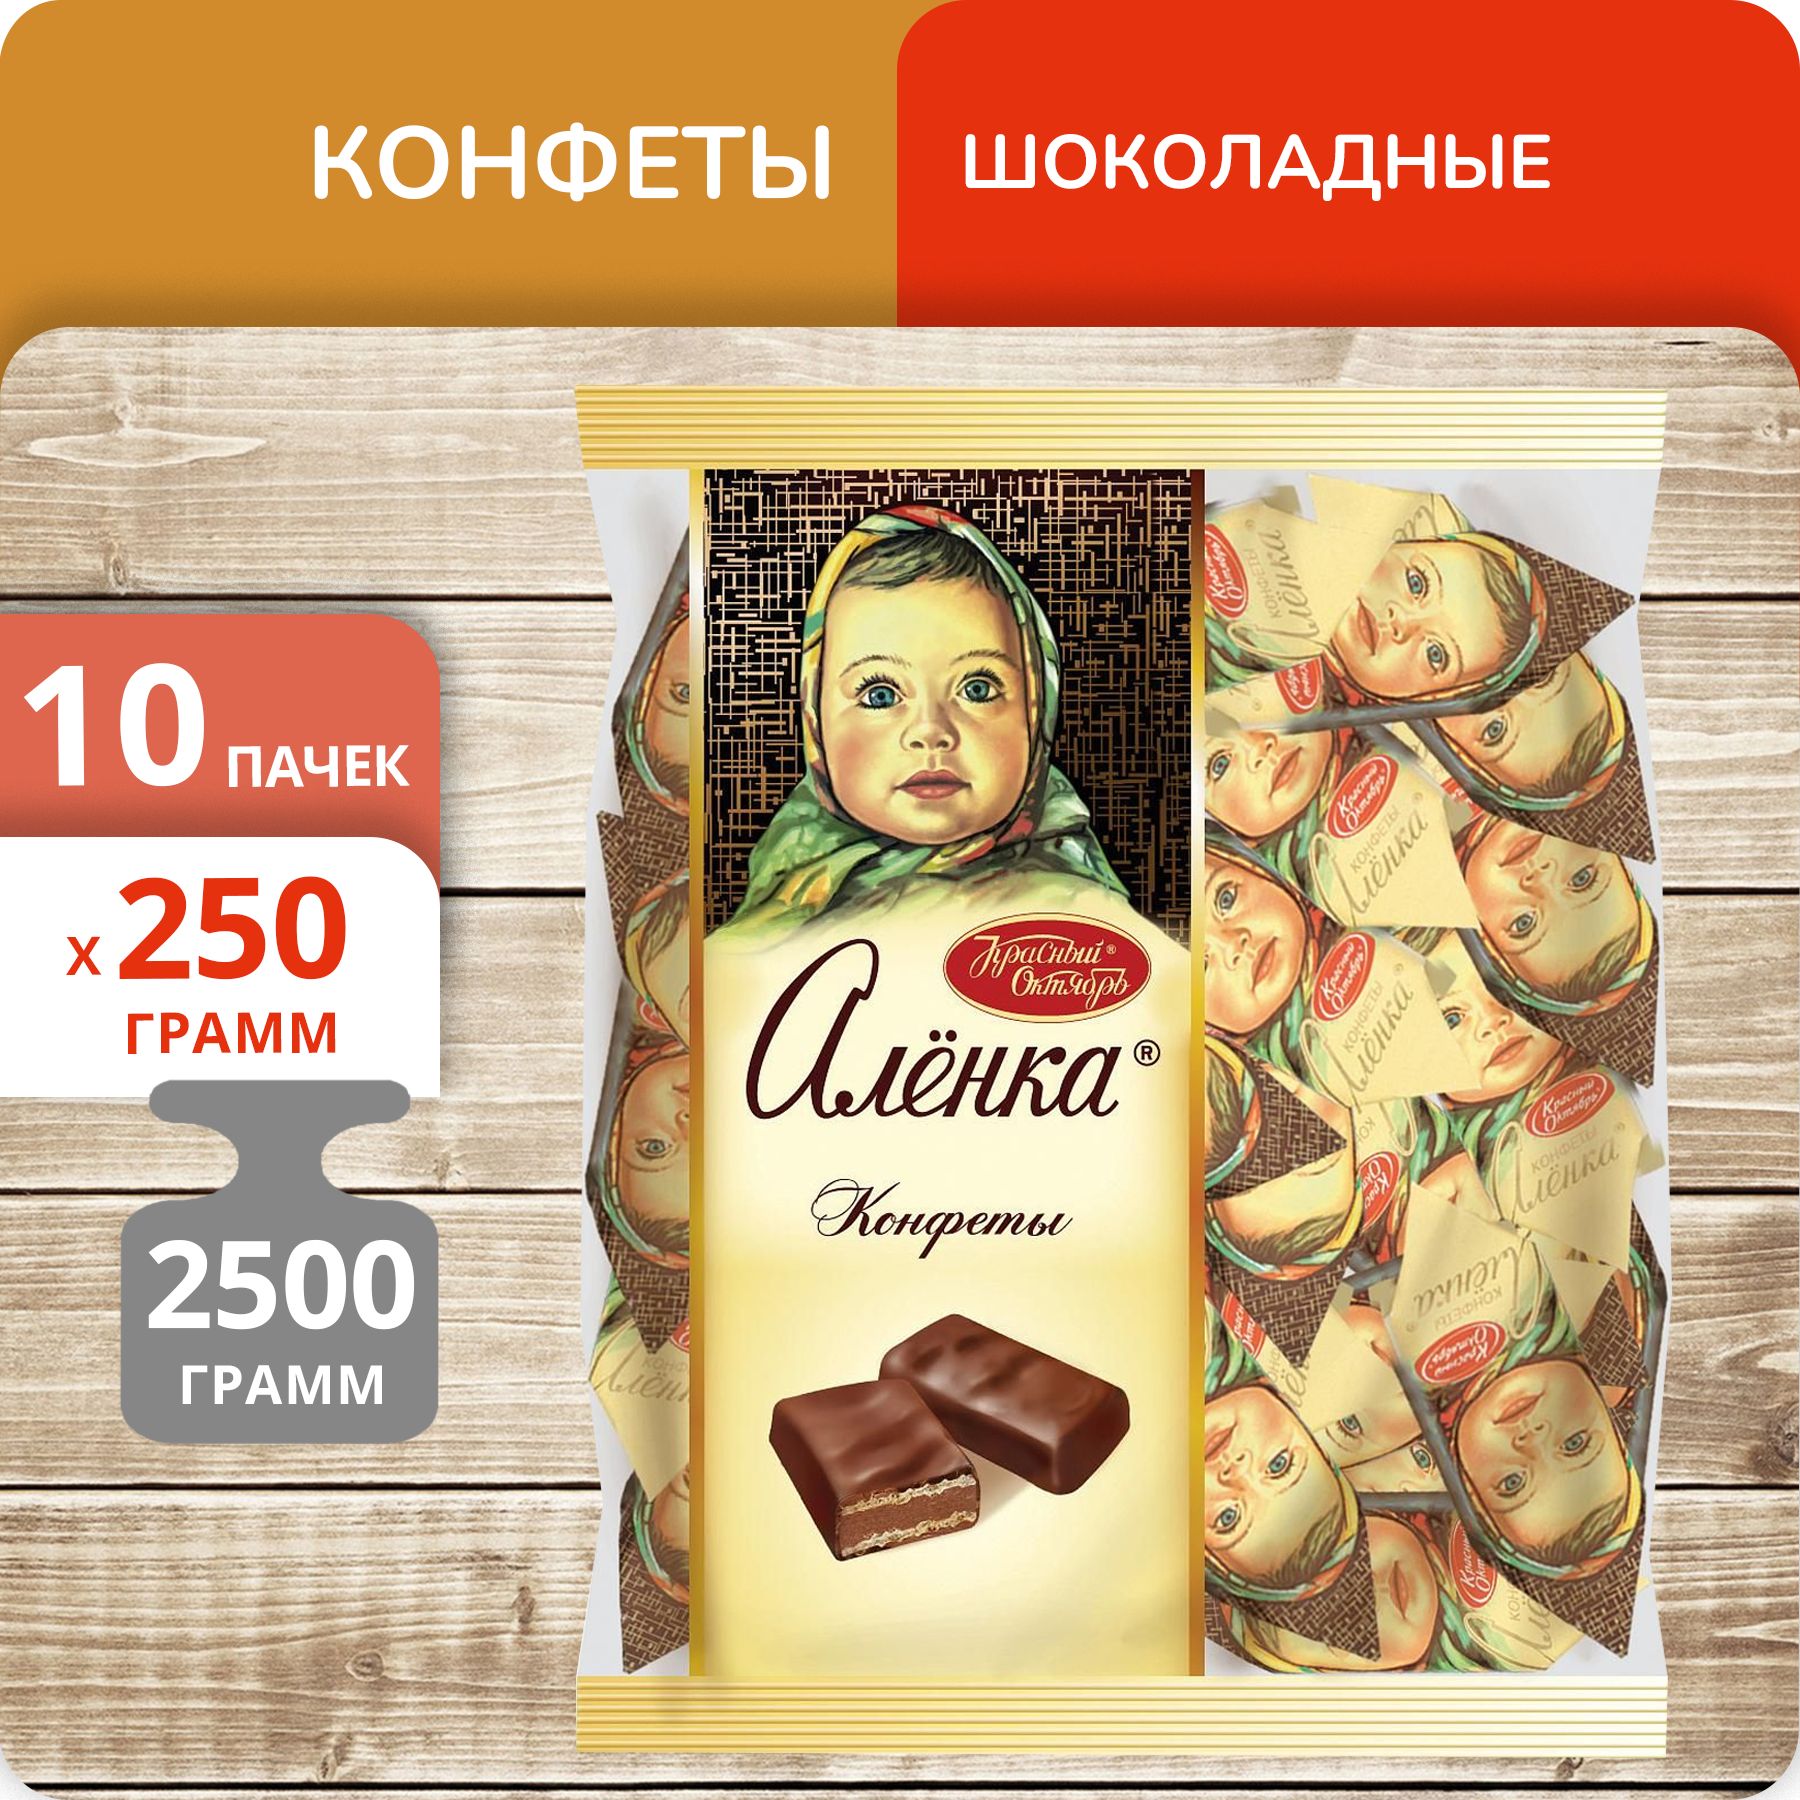 Конфеты Красный Октябрь Аленка шоколадные, 250 г х 10 шт